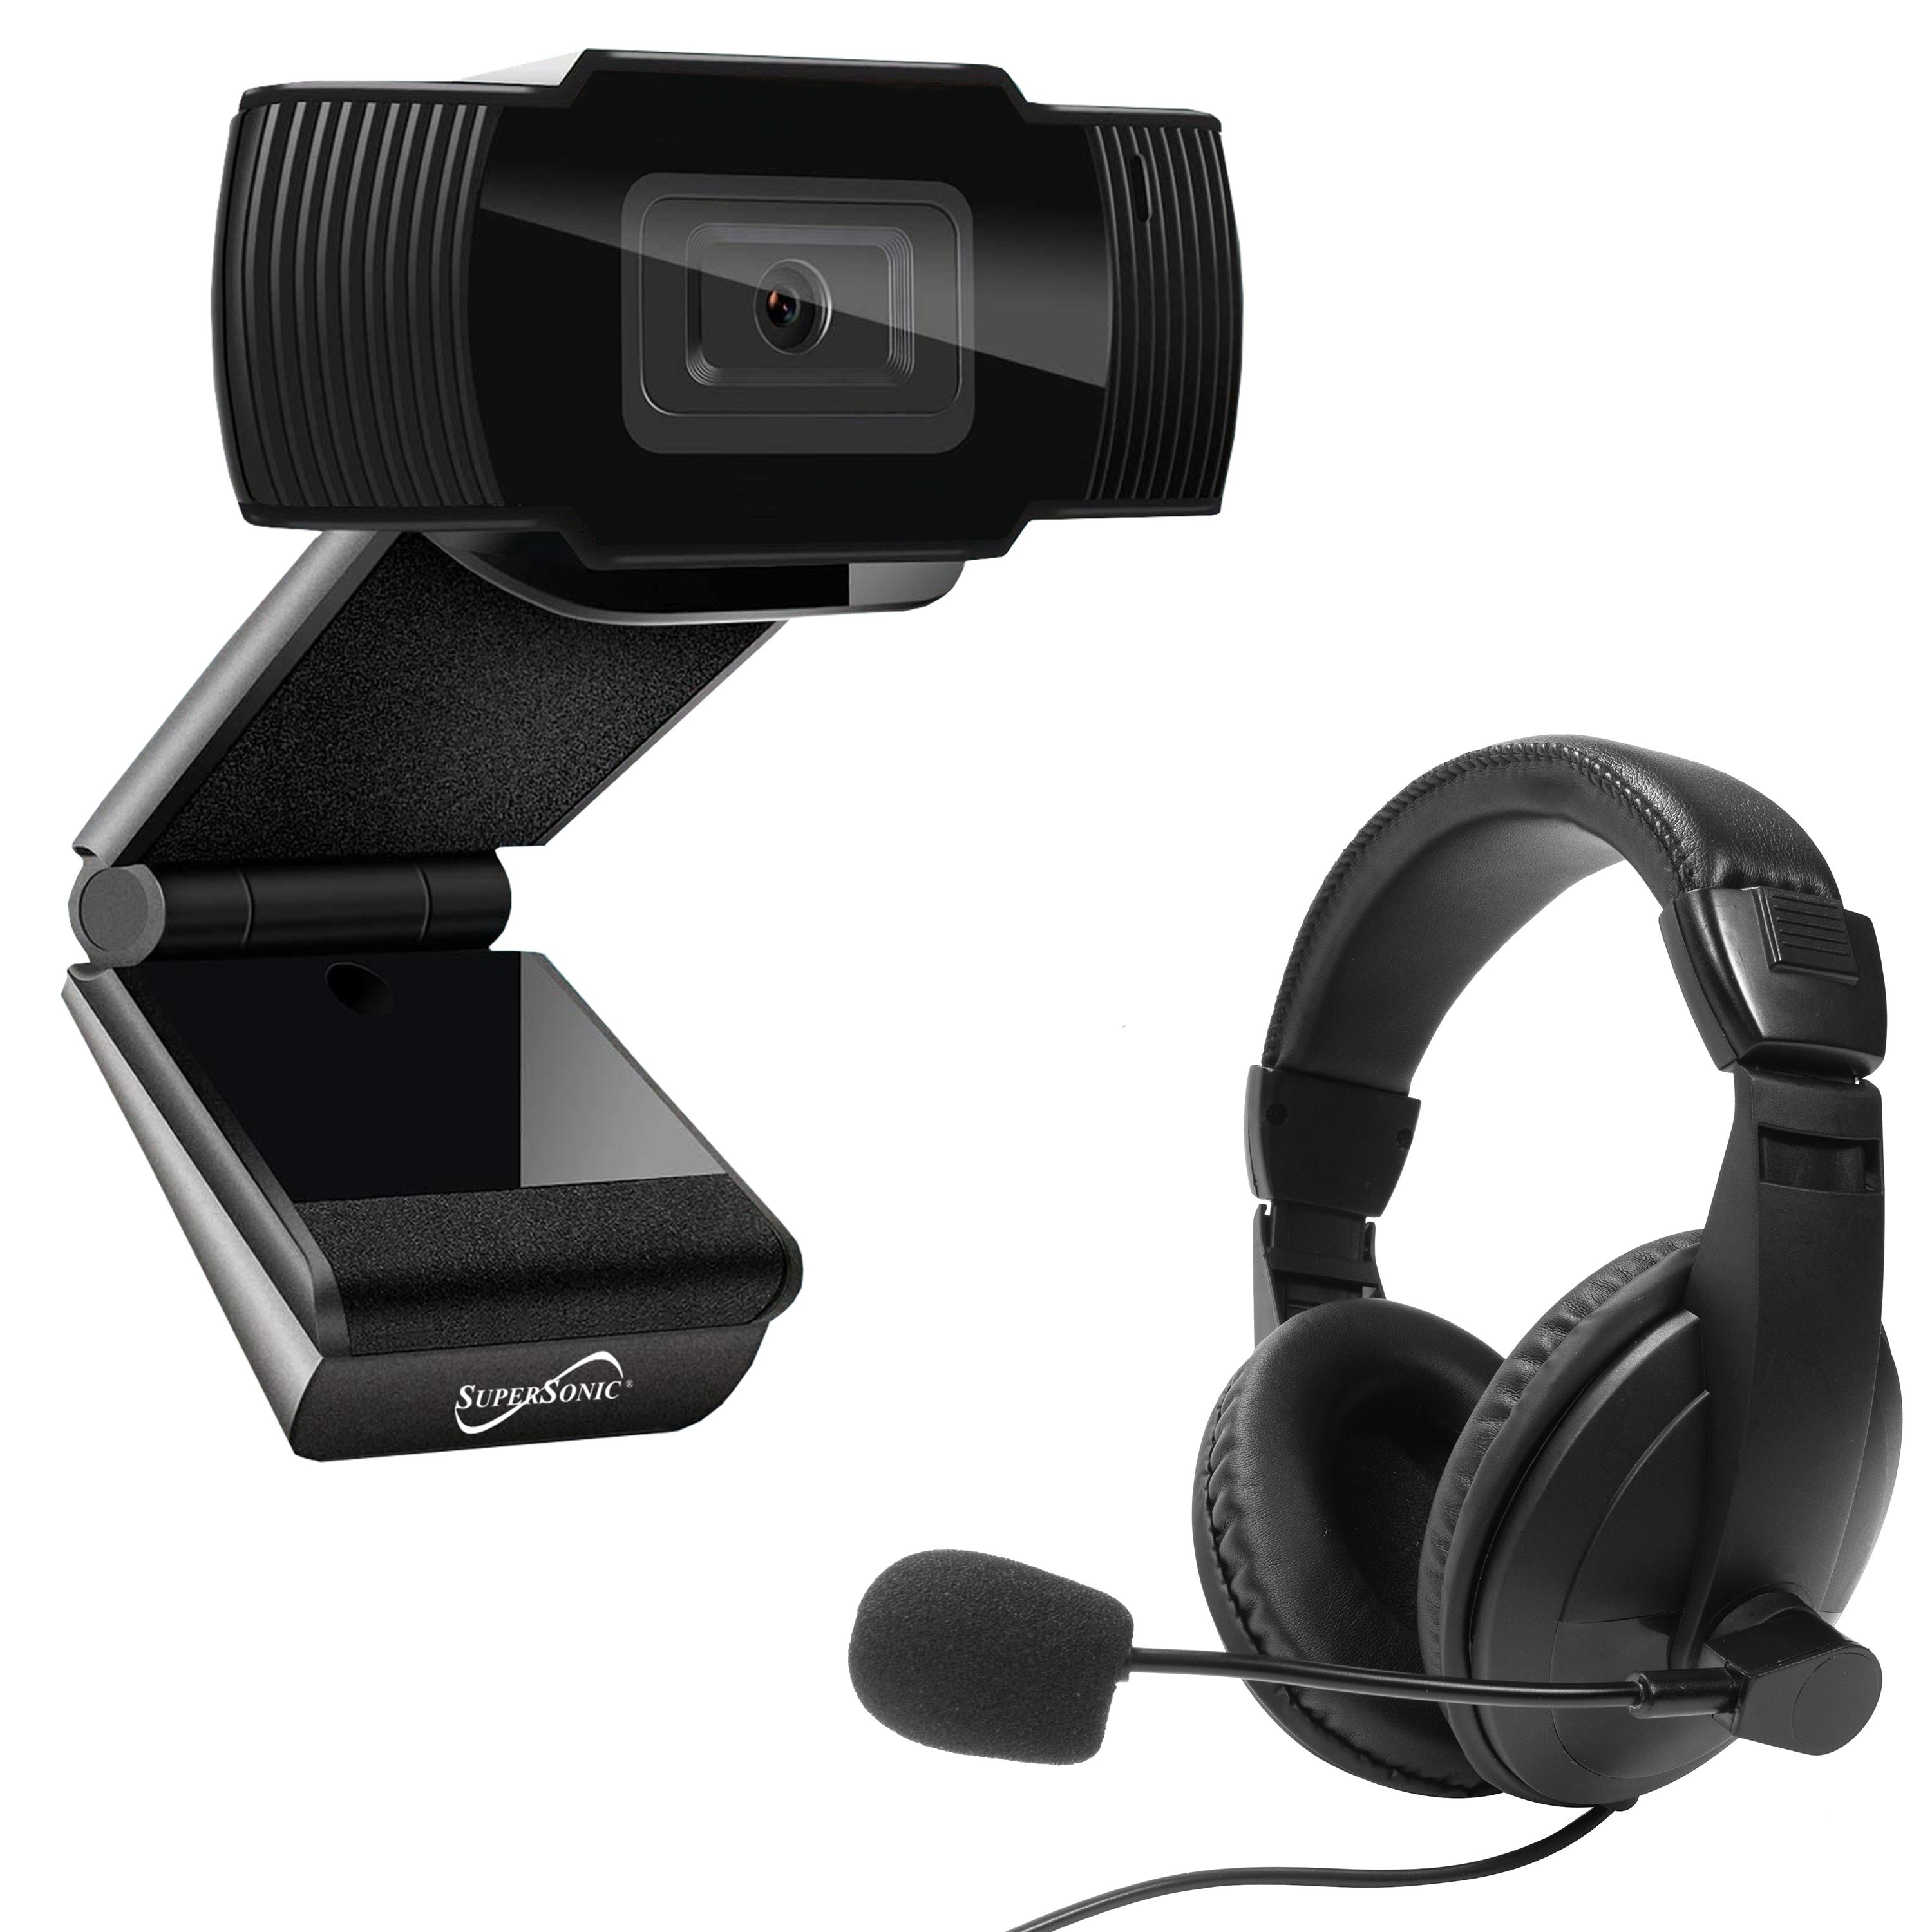 Pro-HD Video Conference Kit Pro-HD Webcam & Stereo Headset (SC-942WCH)